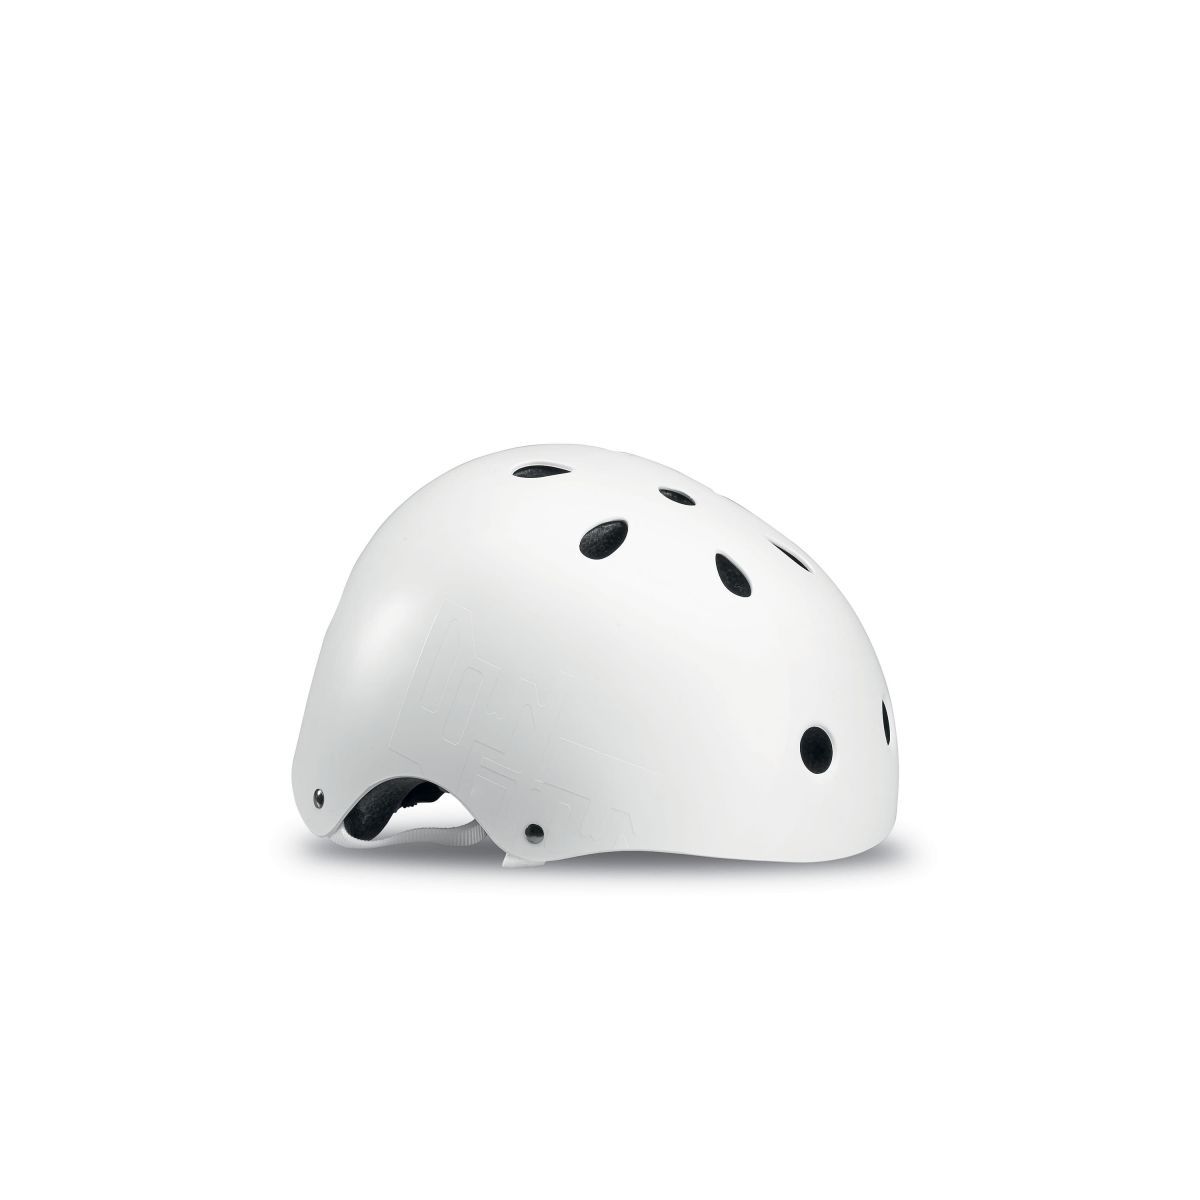 Casque de Roller Downtown Helmet - Blanc Noir